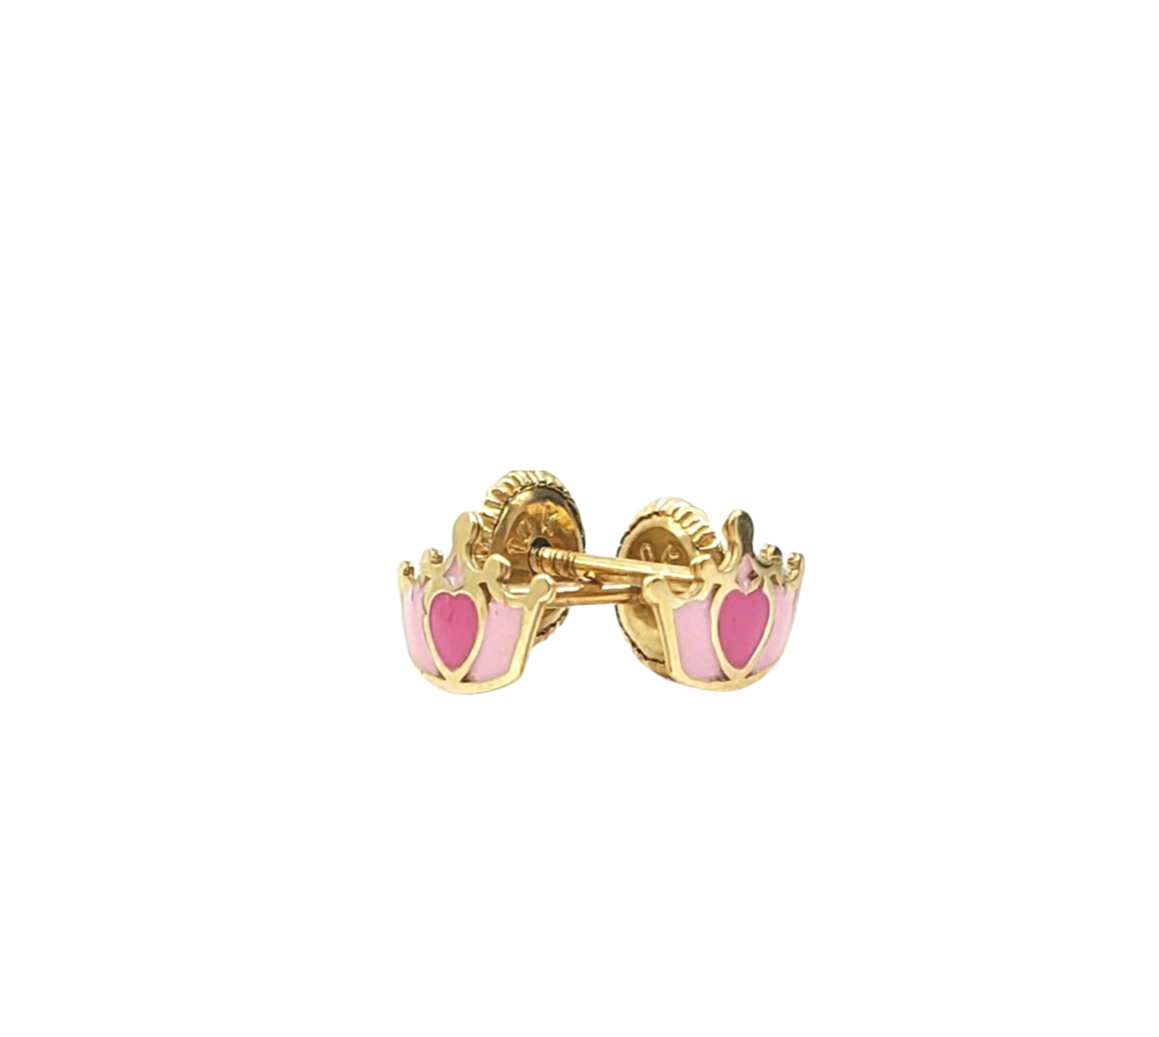 10K Yellow Gold Pink Enamel Crown Earrings with Screw Backs - 5mm x 7mm